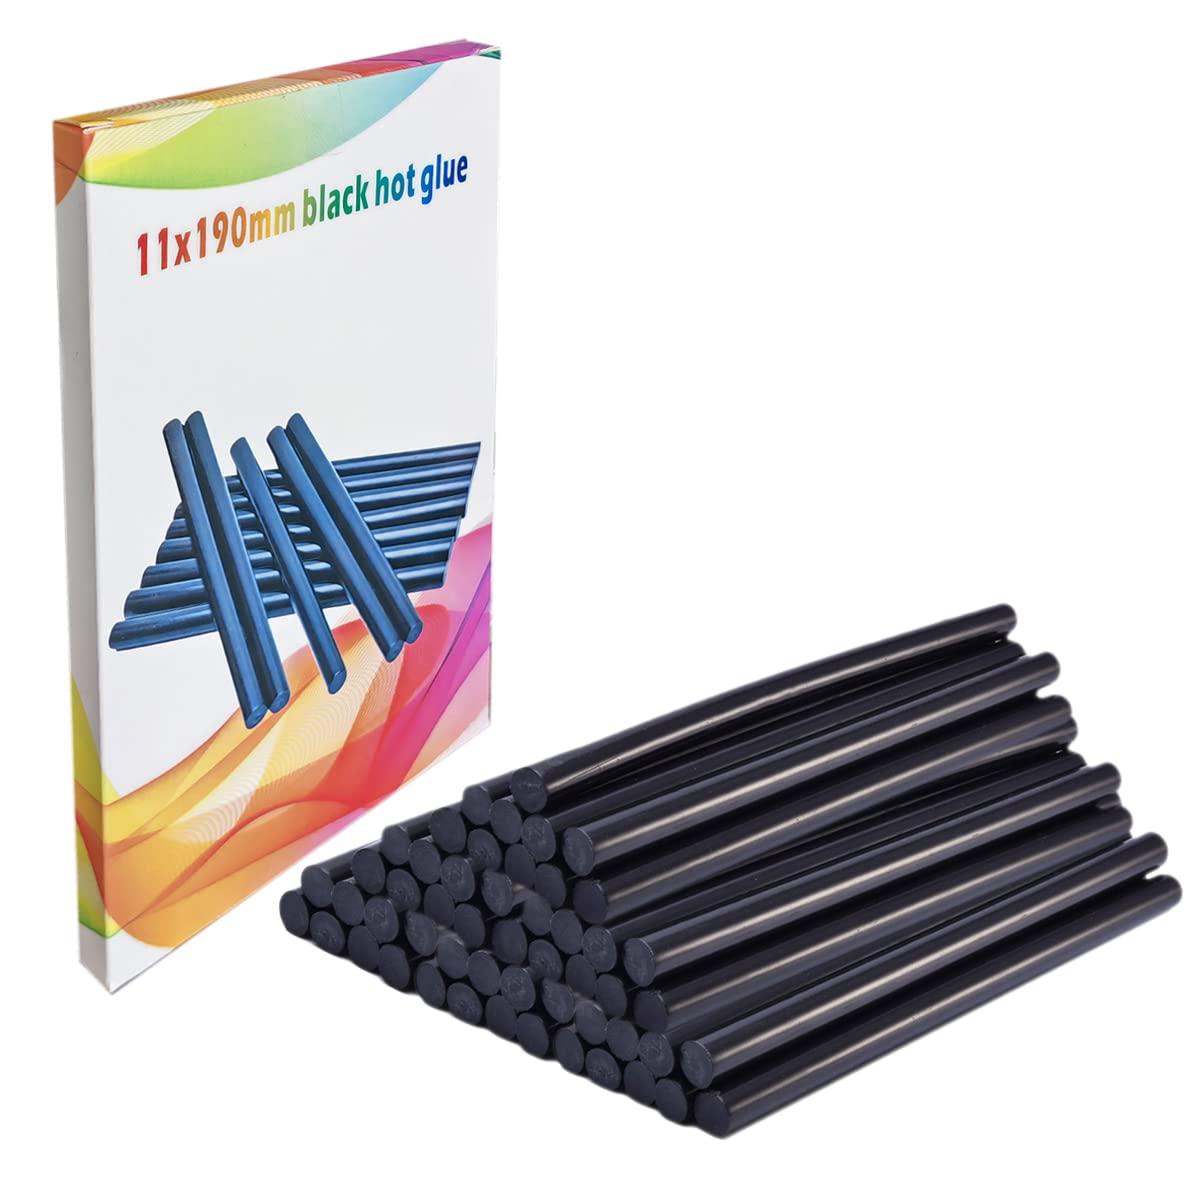 Mangocore 12pcs/lot 11mmx190mm DIY Hot Melt Glue Sticks Black